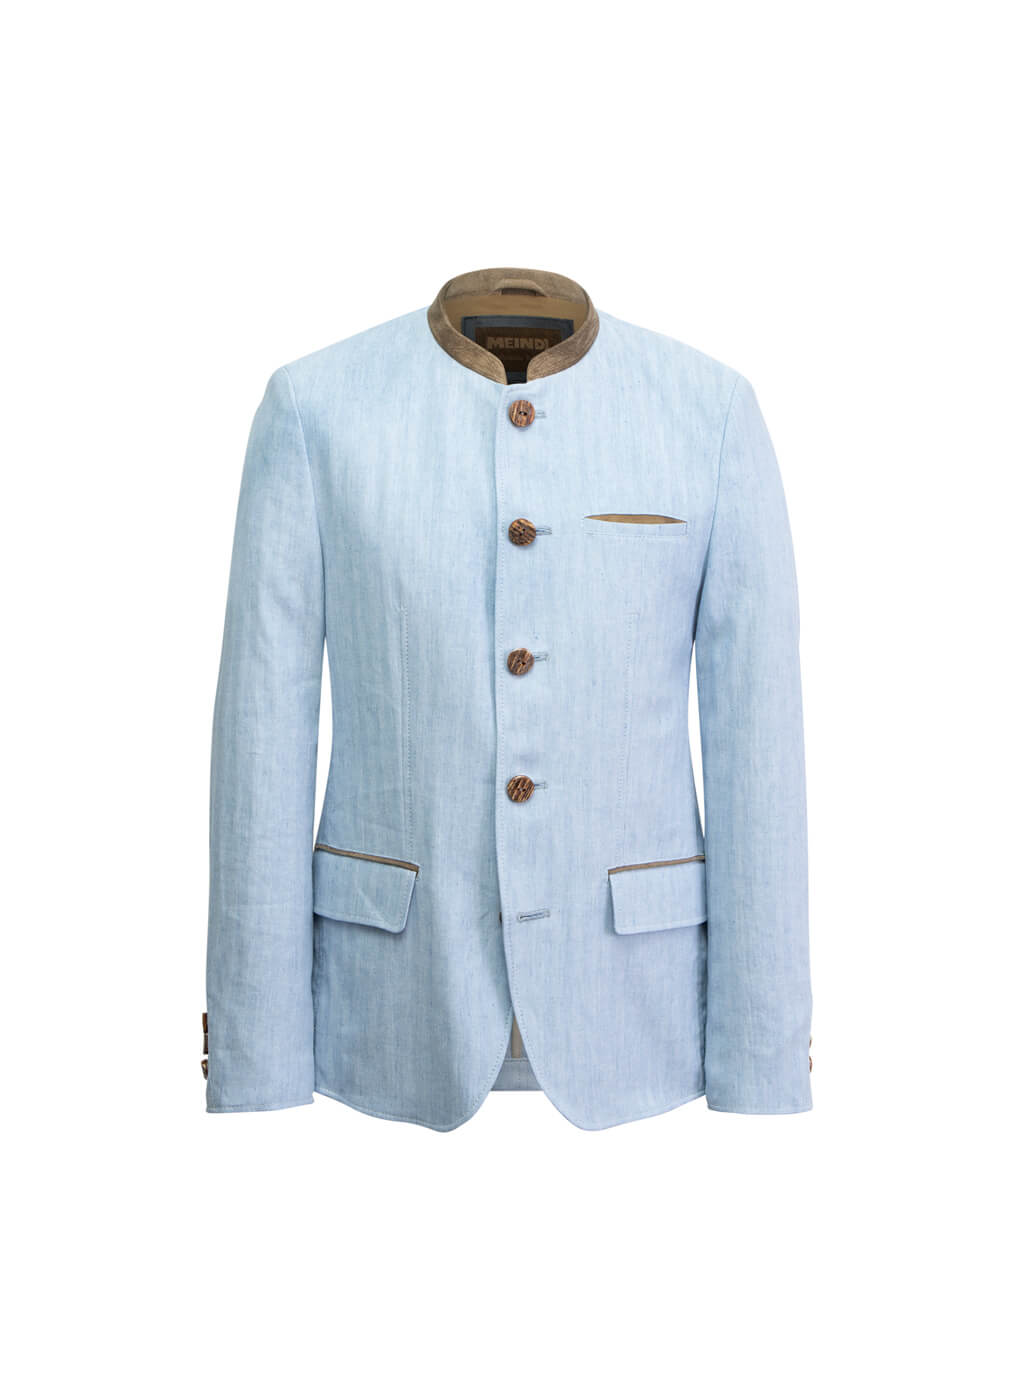 Fabric Jacket Men “Hochries”, sky blue